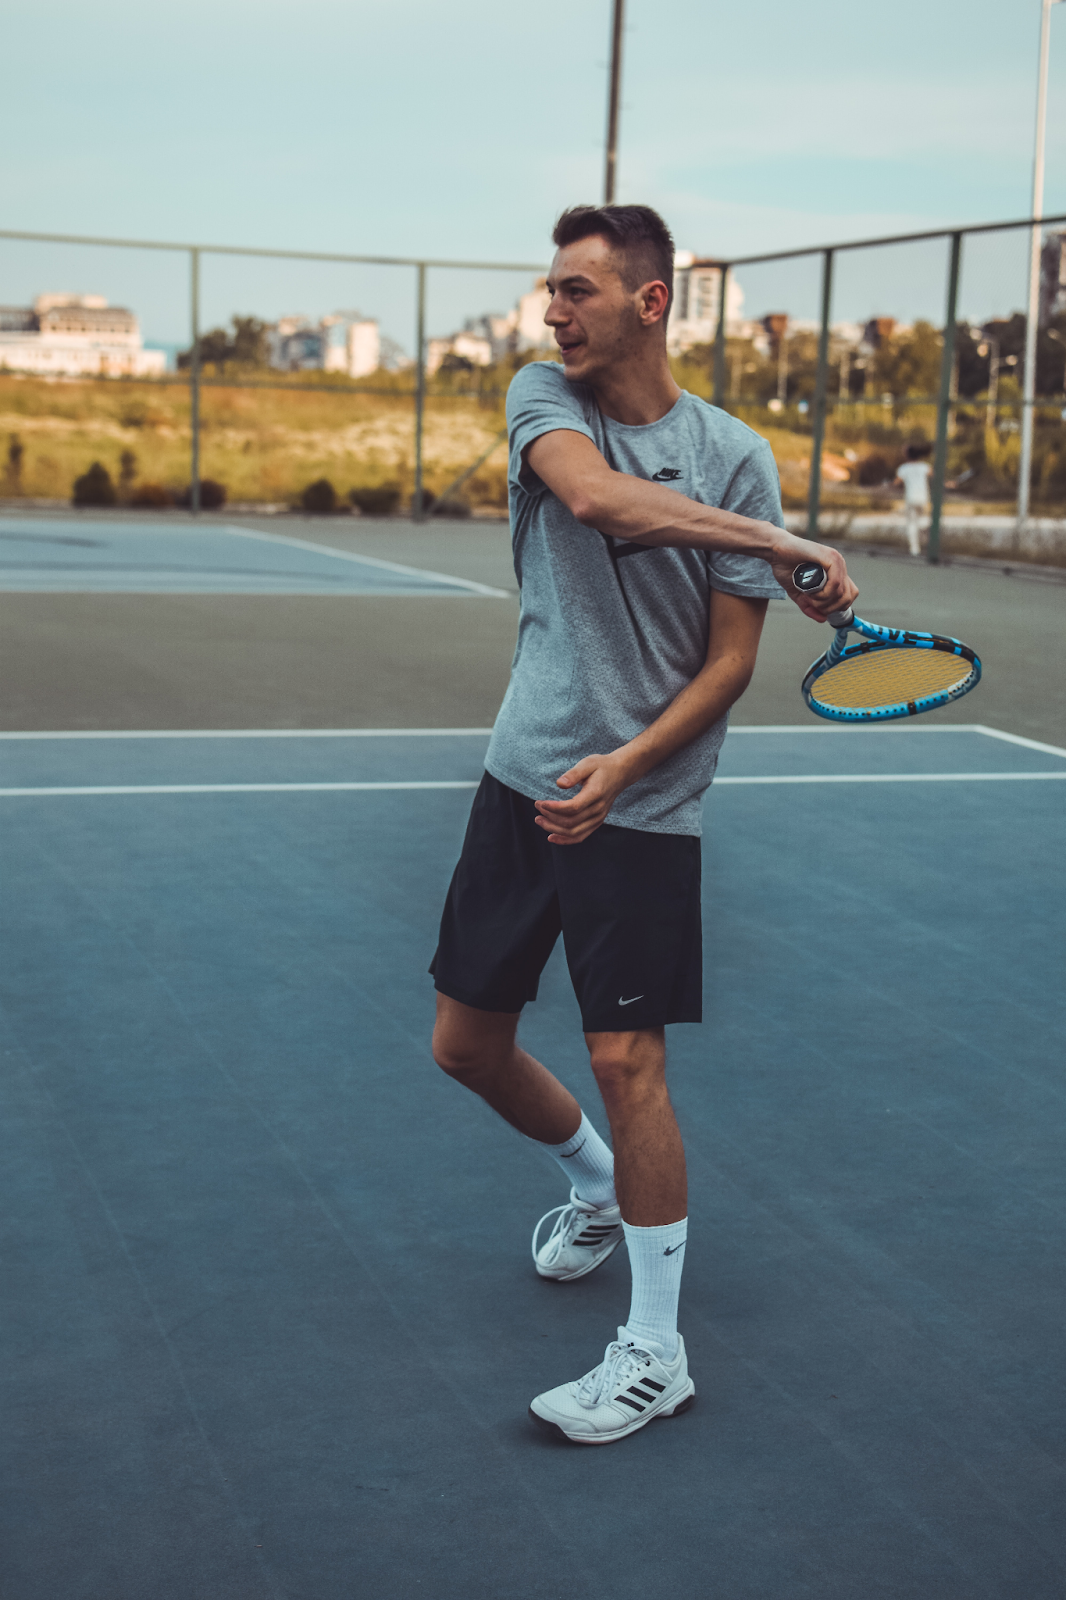 A man playing tennis 